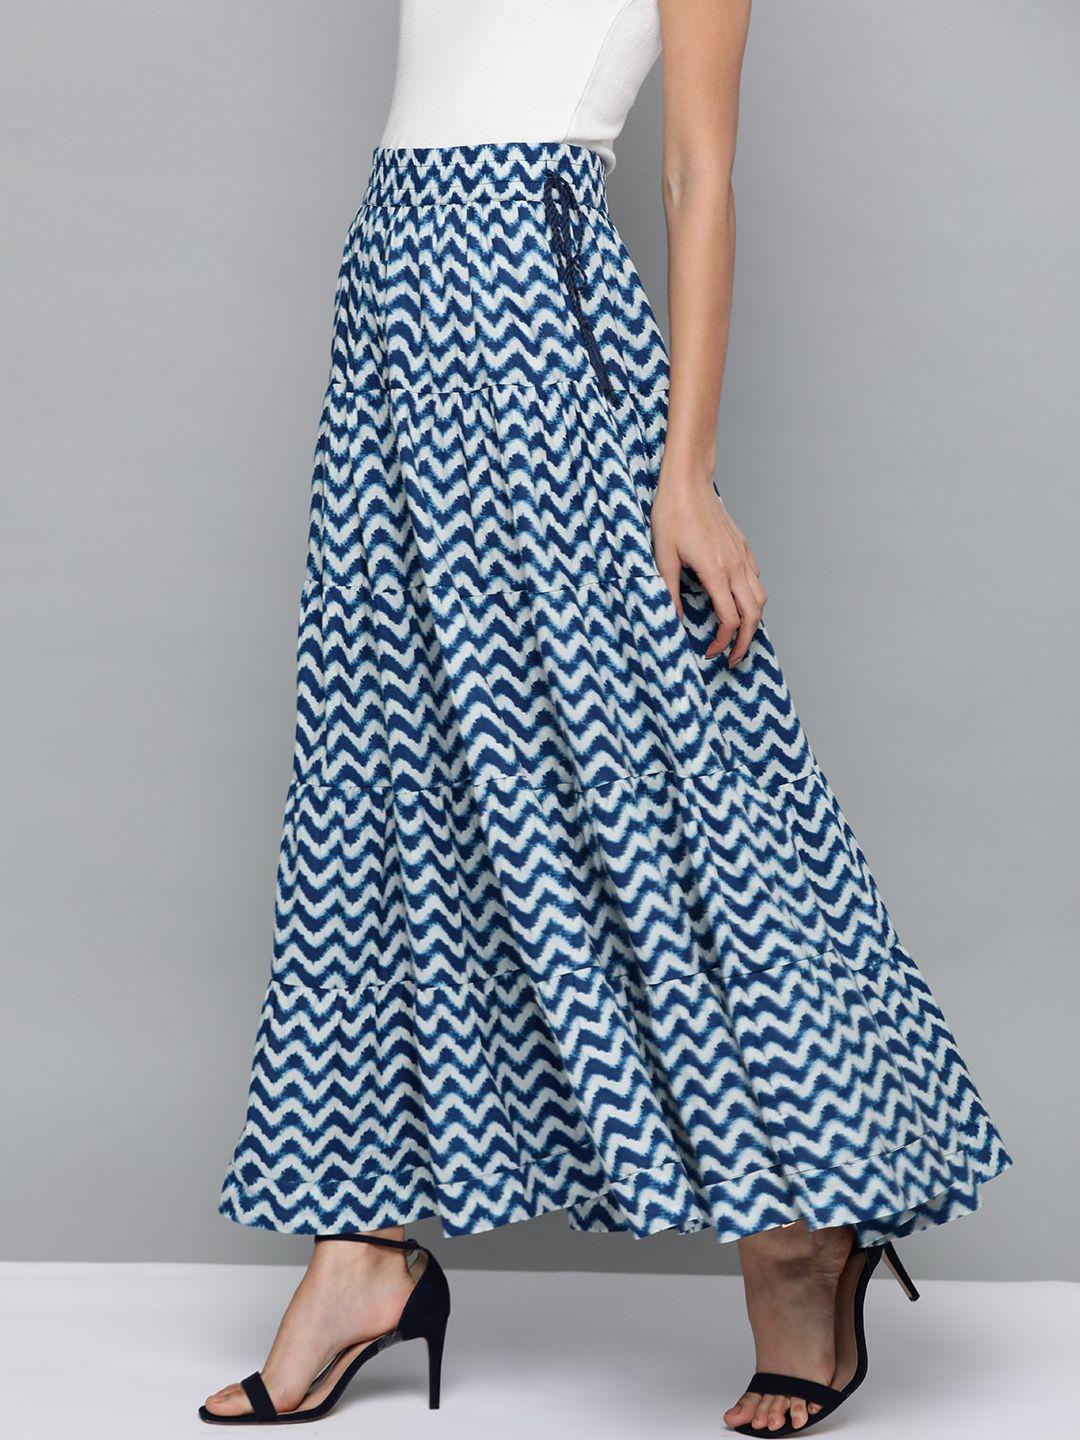 here&now women navy blue & white chevron printed tiered maxi skirt